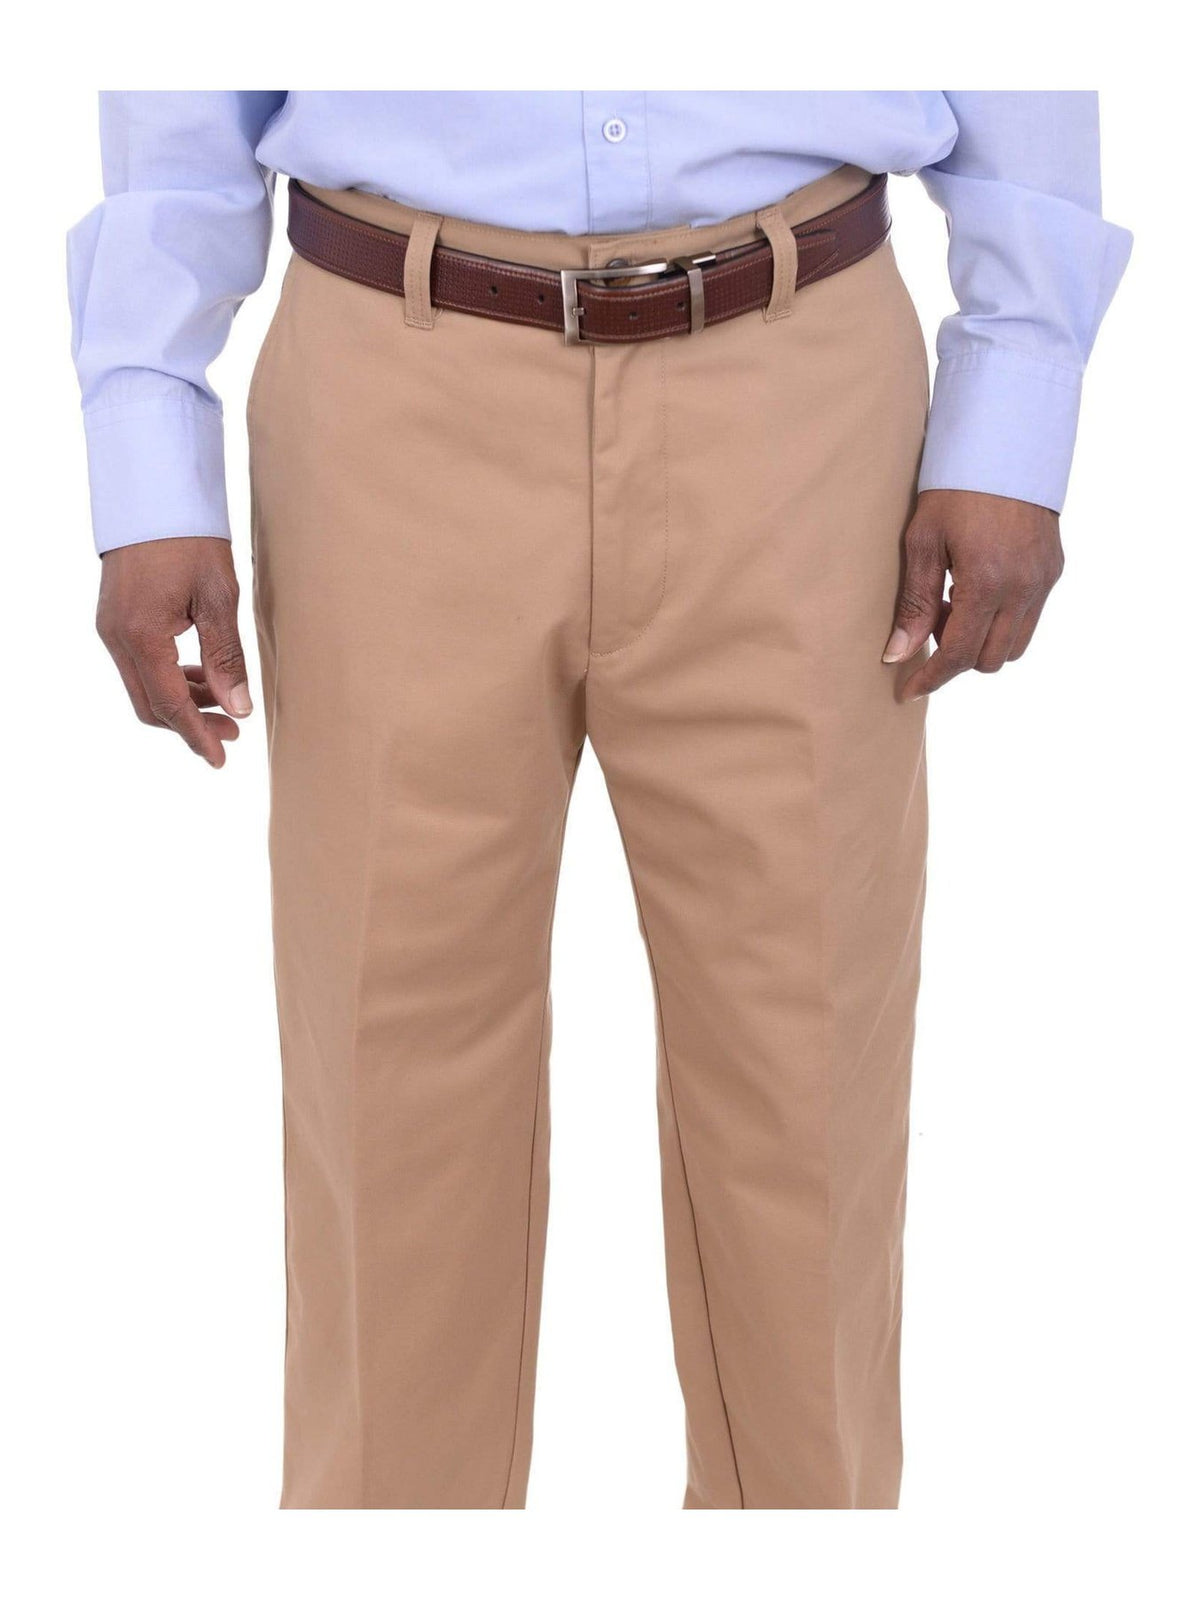 Haggar Sale Pants Haggar Regular Fit Solid Beige Khaki Chinos Flat Front Washable Cotton Pants